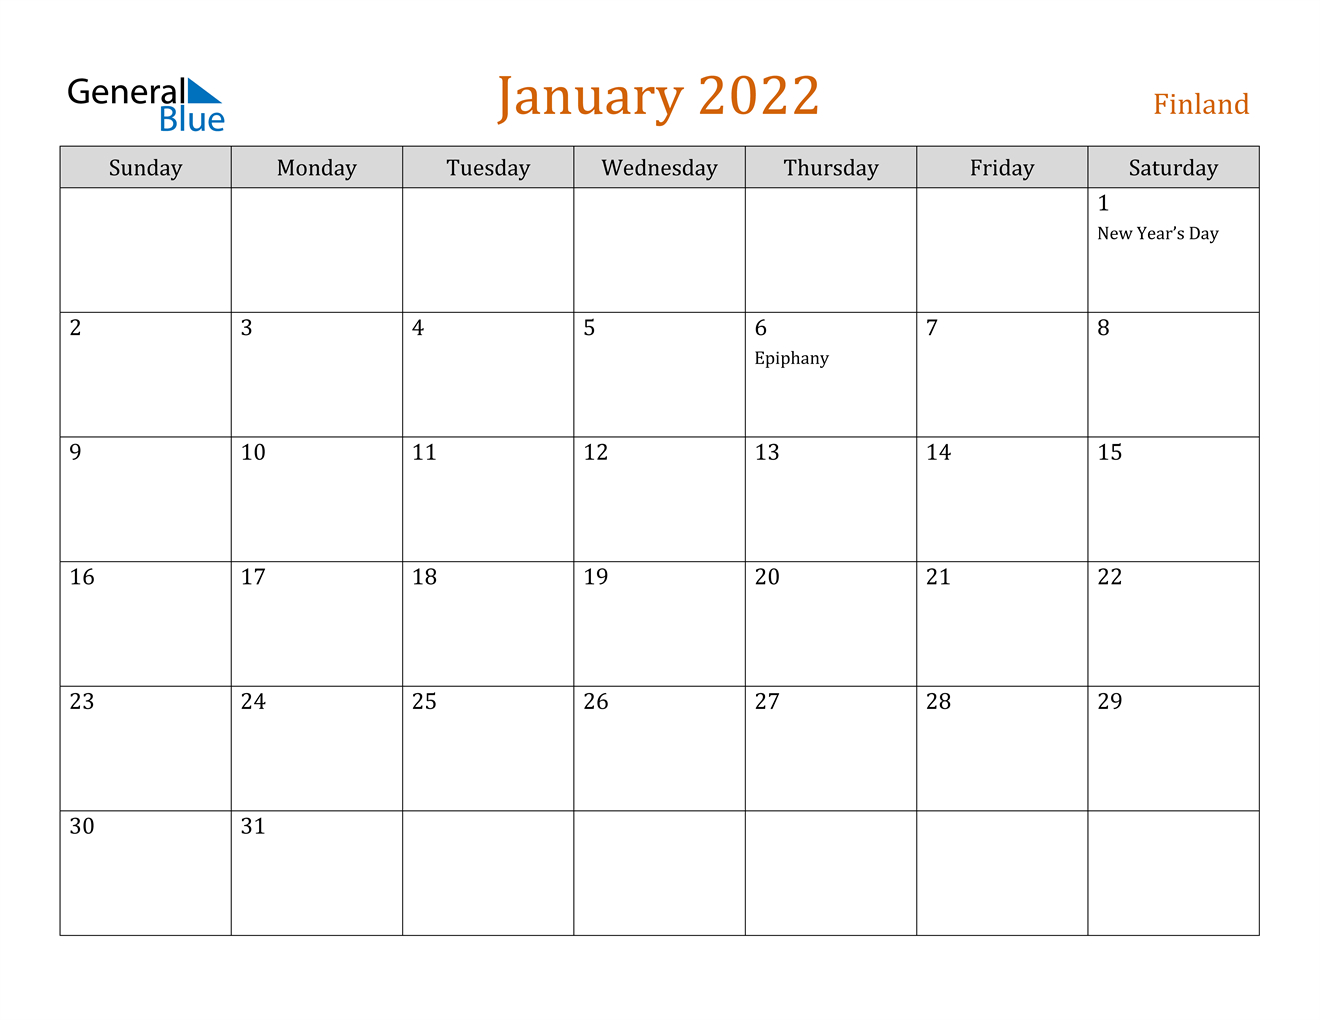 January 2022 Calendar - Finland